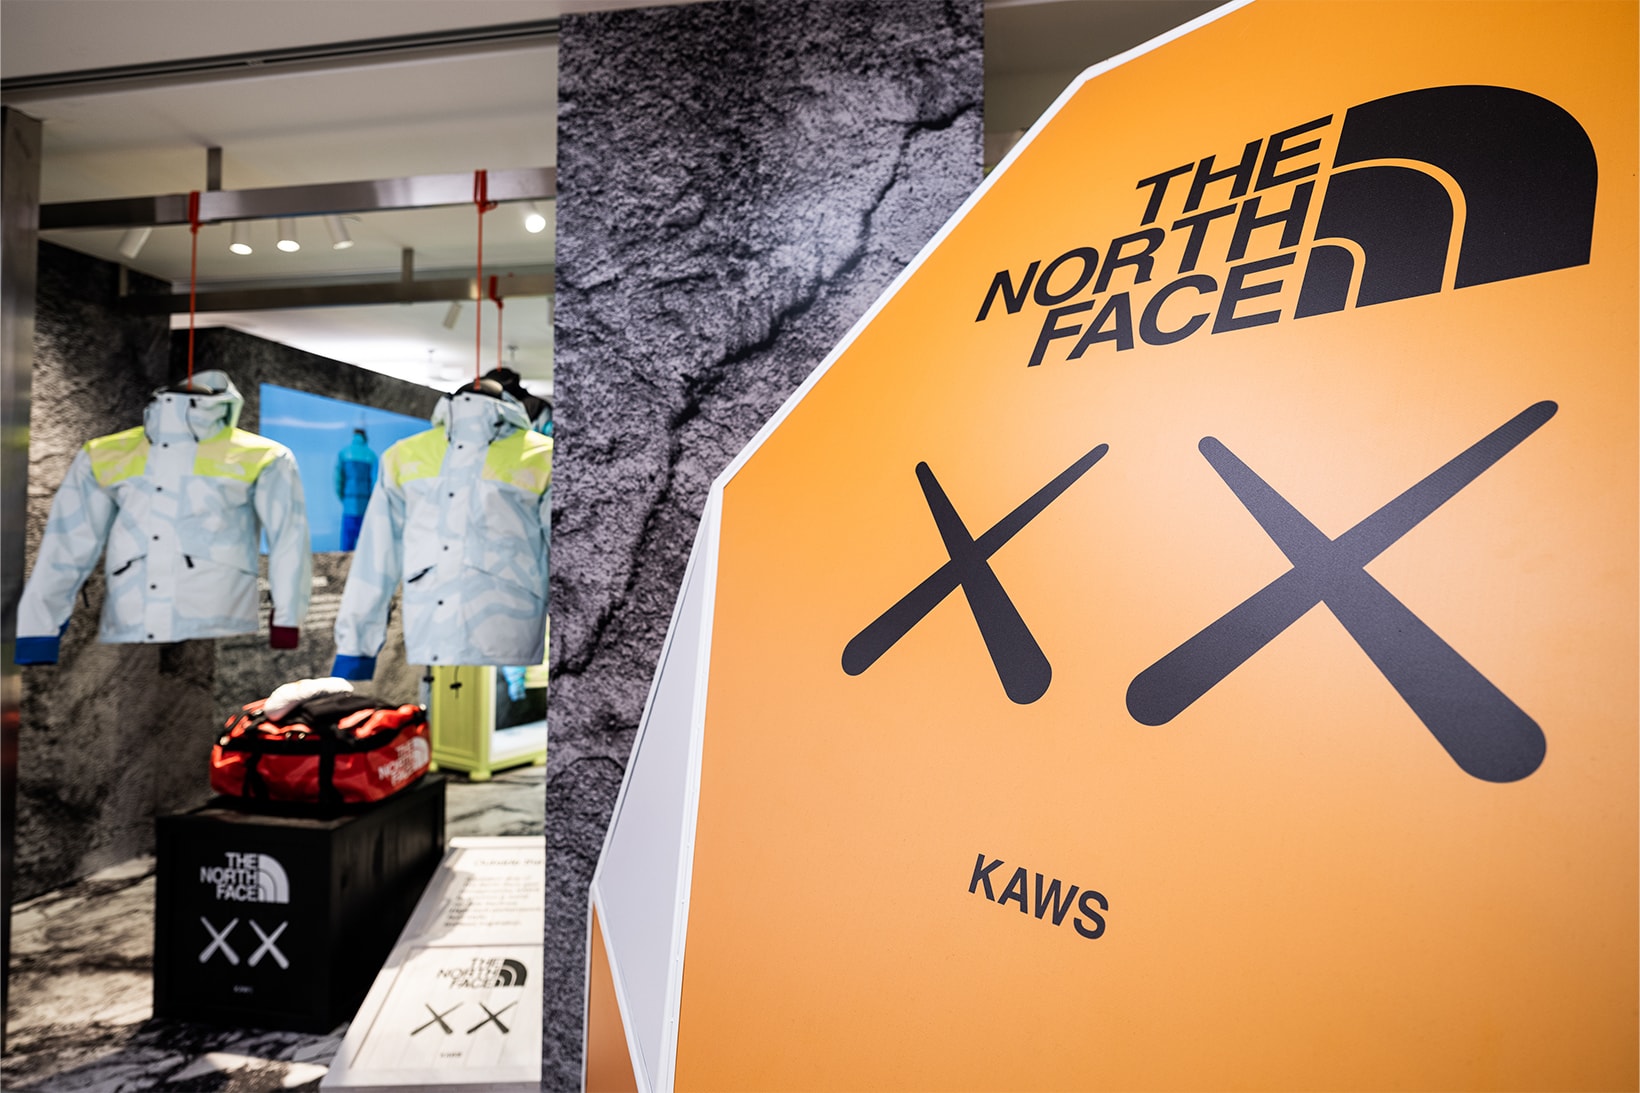 The North Face XX Kaws Collaboration Pop-Up Store LANDMARK Entrance Details